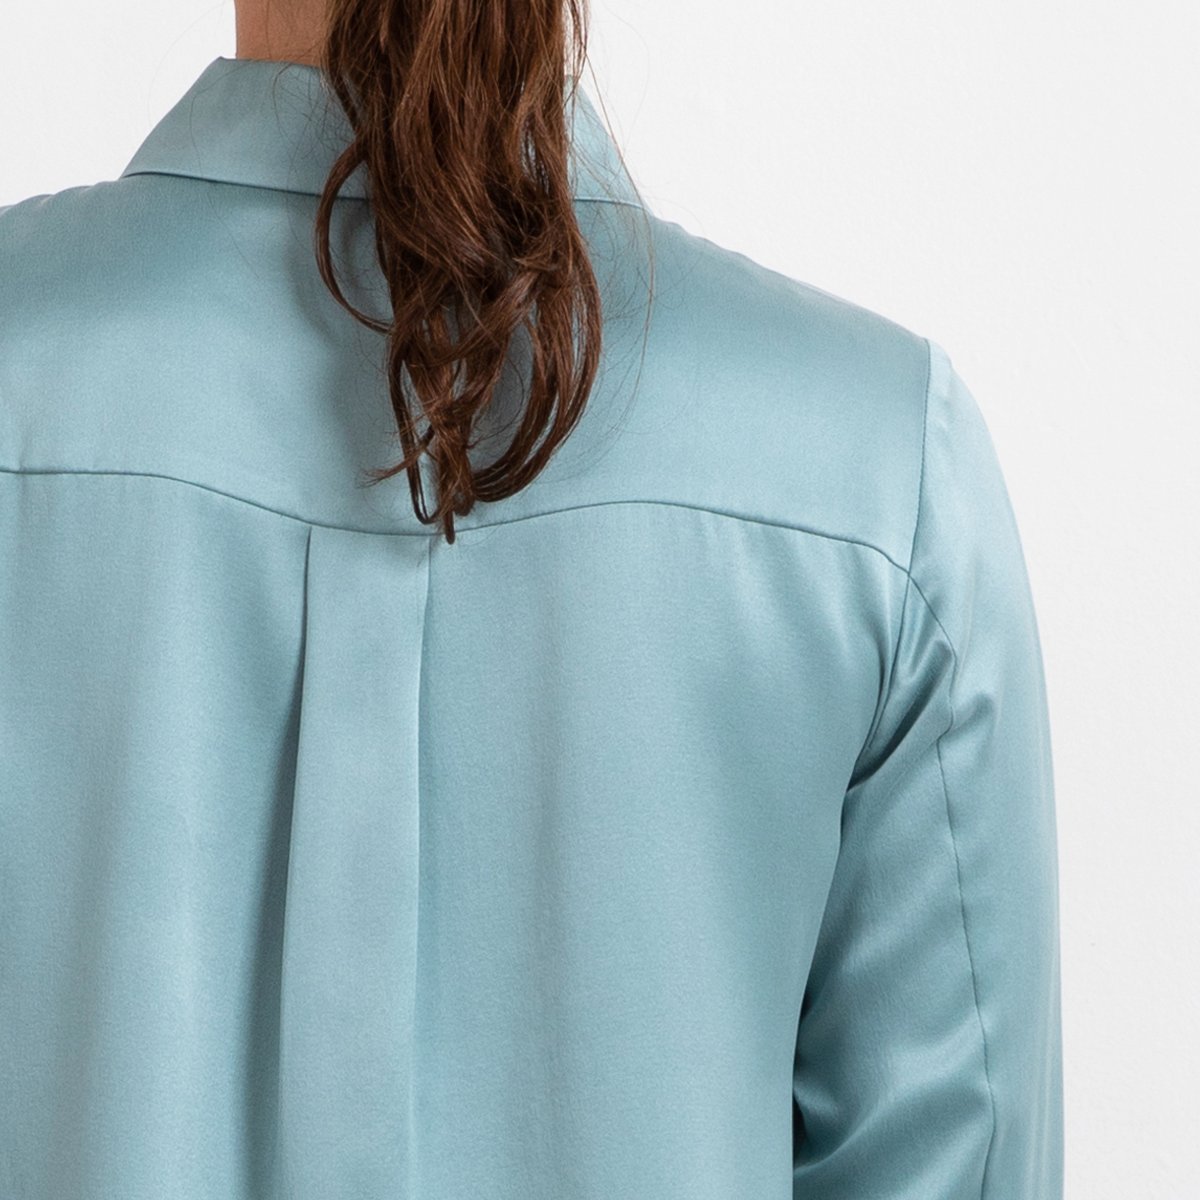 Essential silk shirt in stone blue colour by Studio Heijne